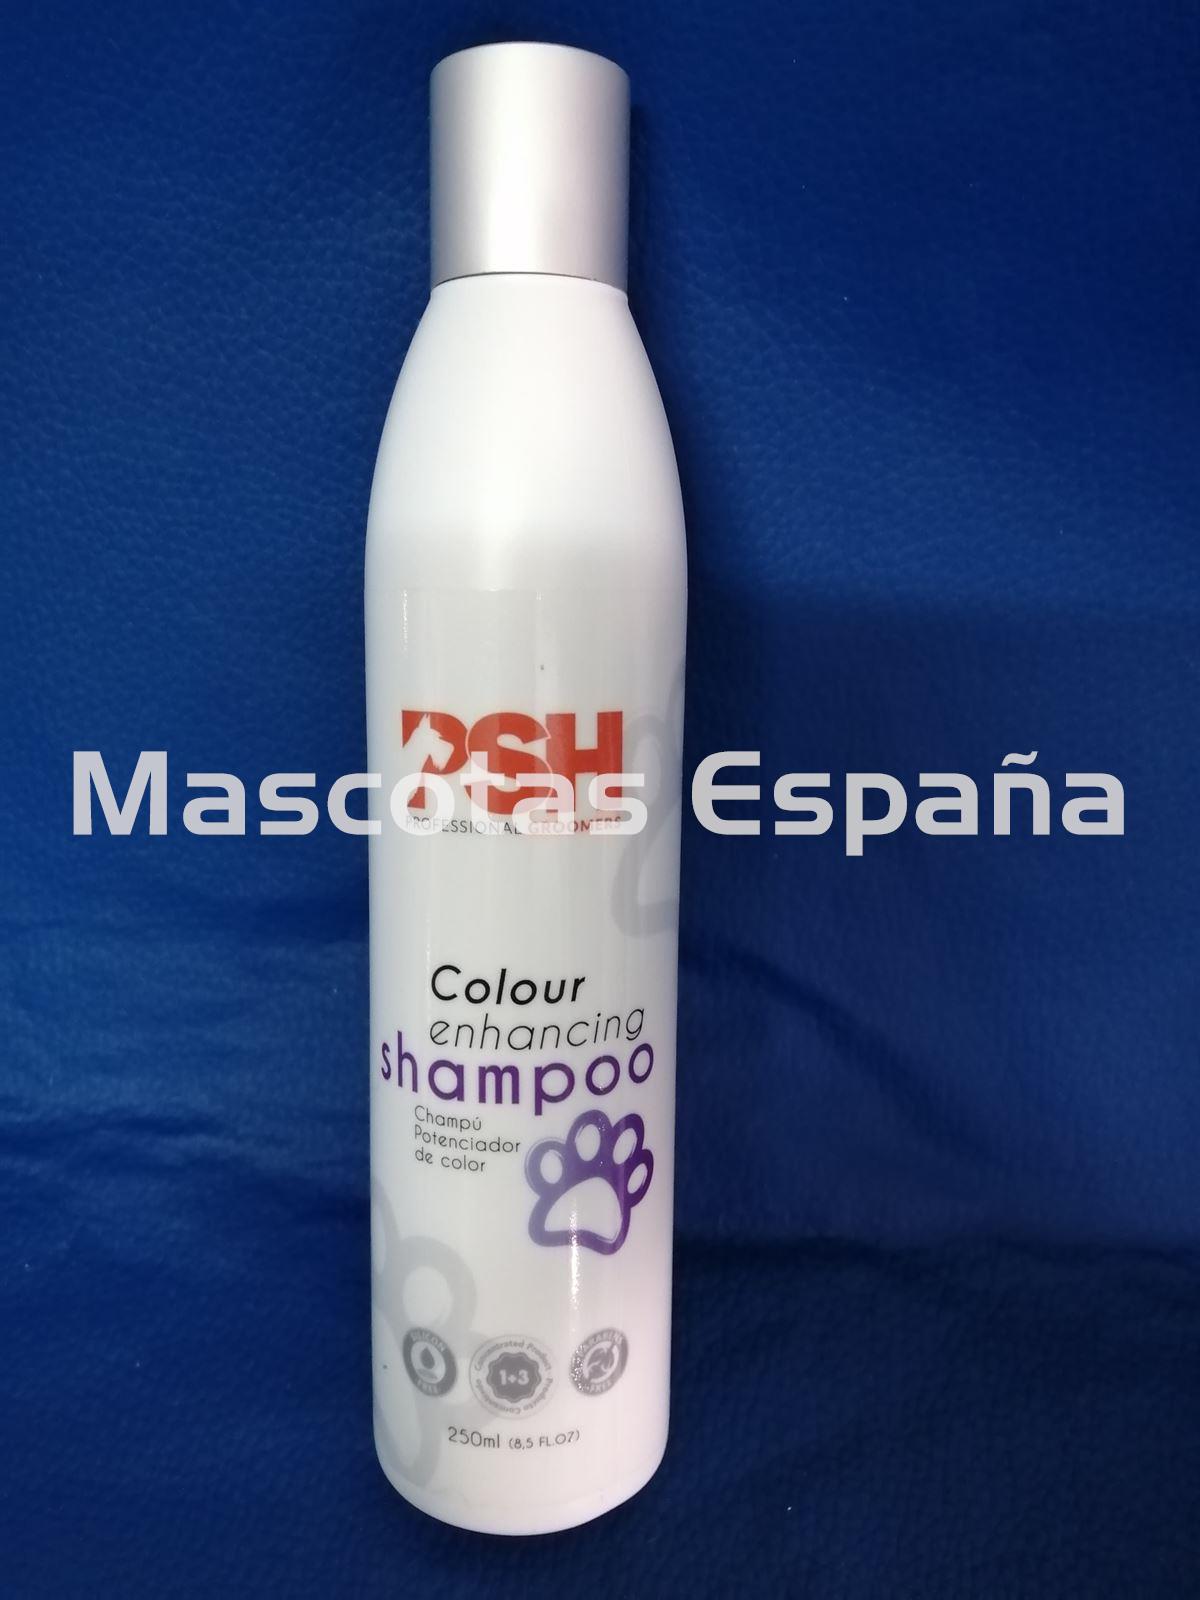 PSH Colour Enhancing Shampoo (Champú potenciador del color con blanqueador bi o tricolores) 250ml - Imagen 1